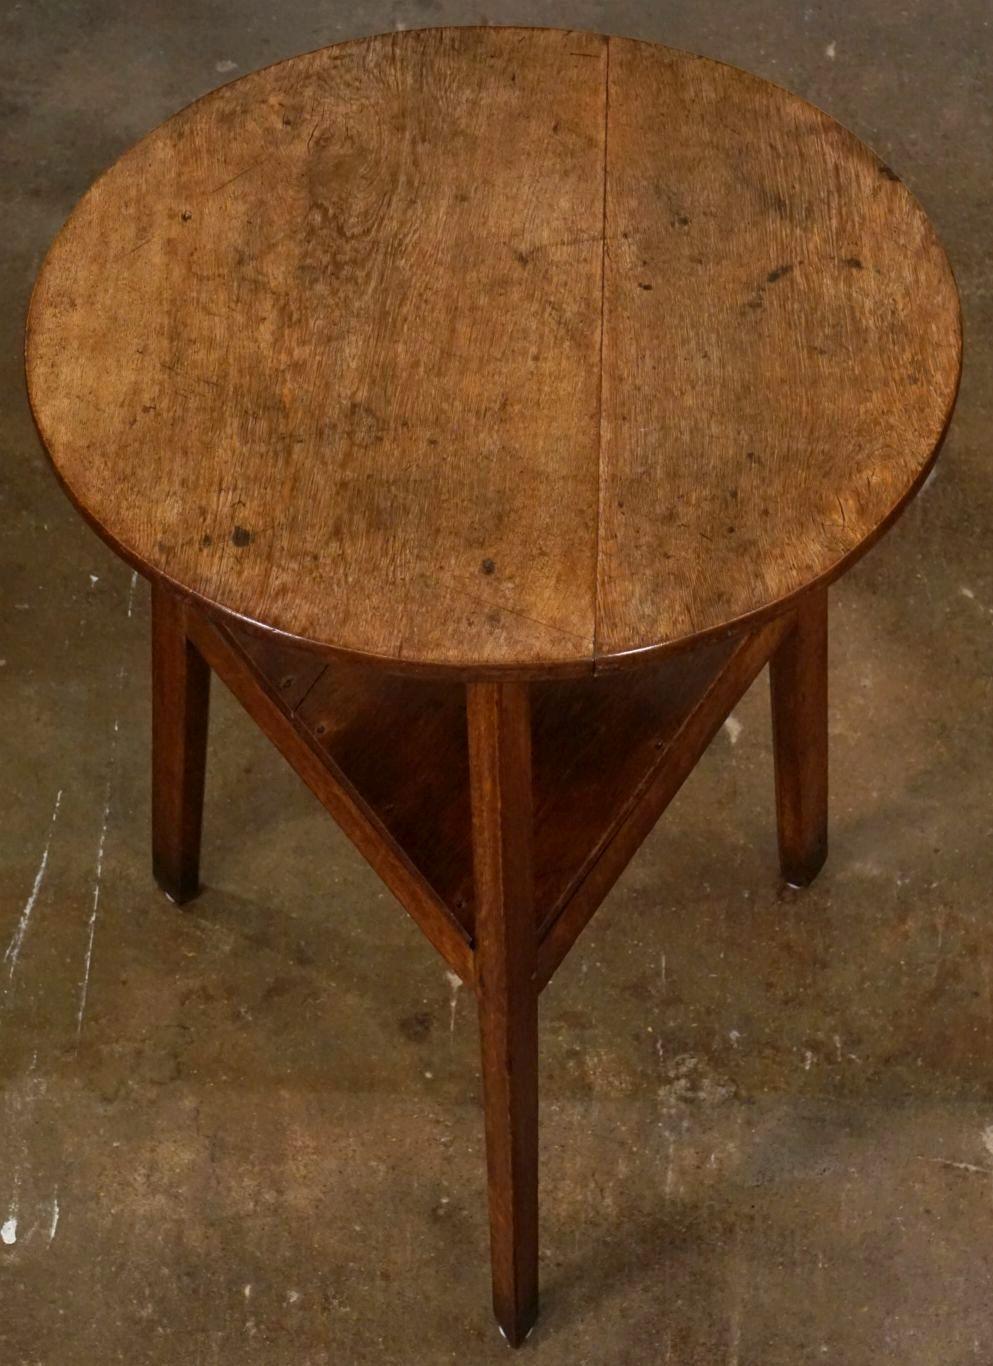 Rustic English Cricket Table of Oak